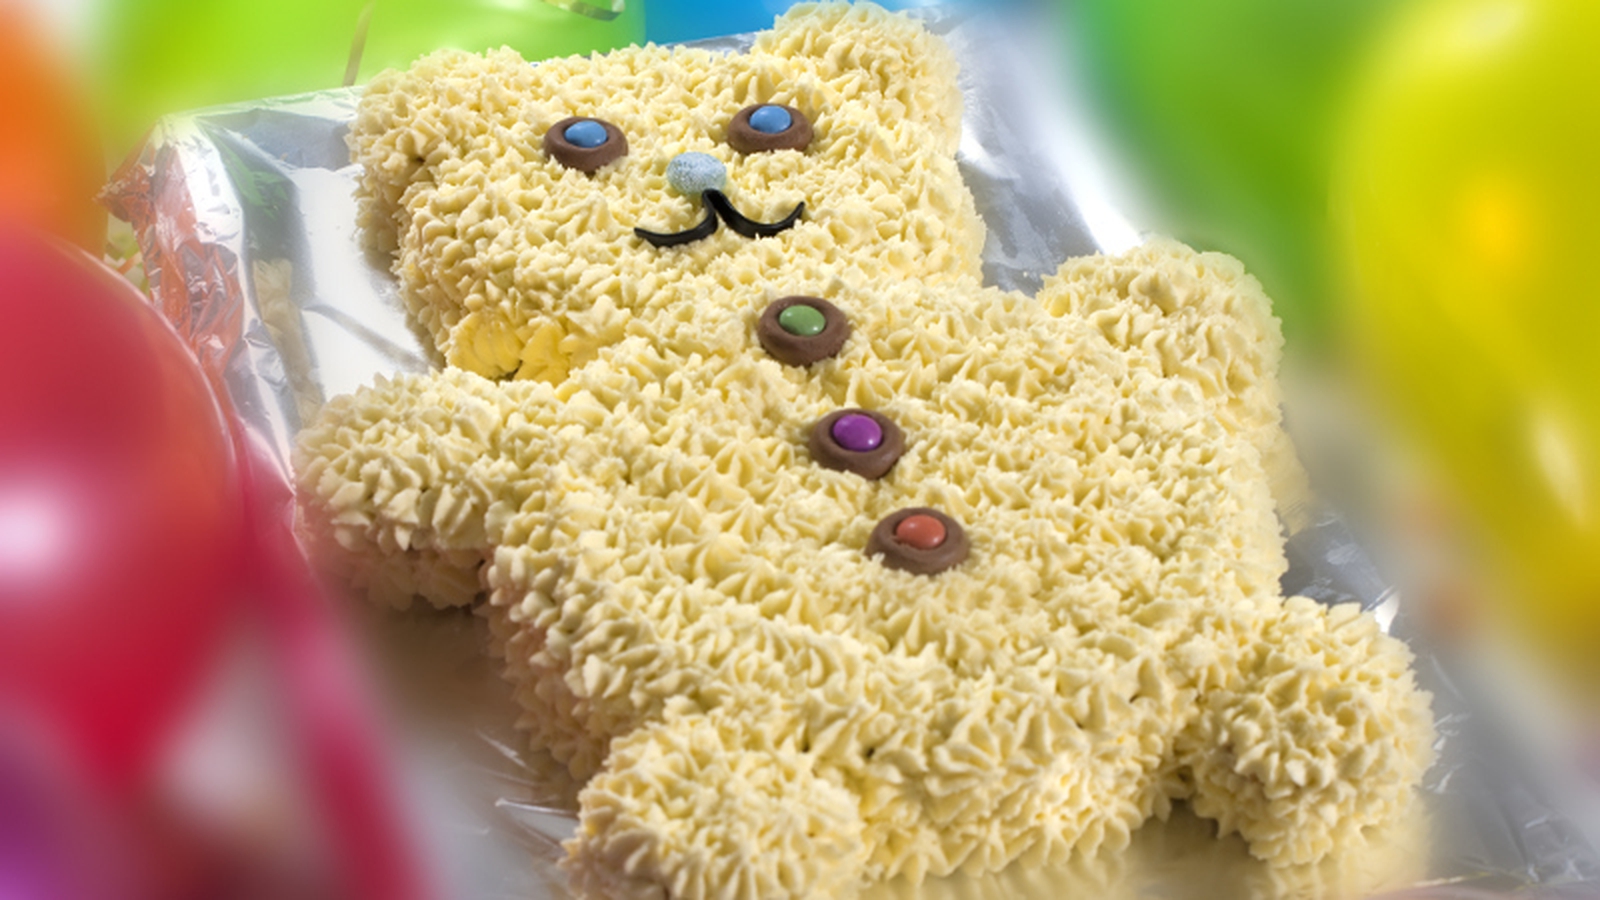 Adorable Teddy Bear Cake - Jeanette's Cakes